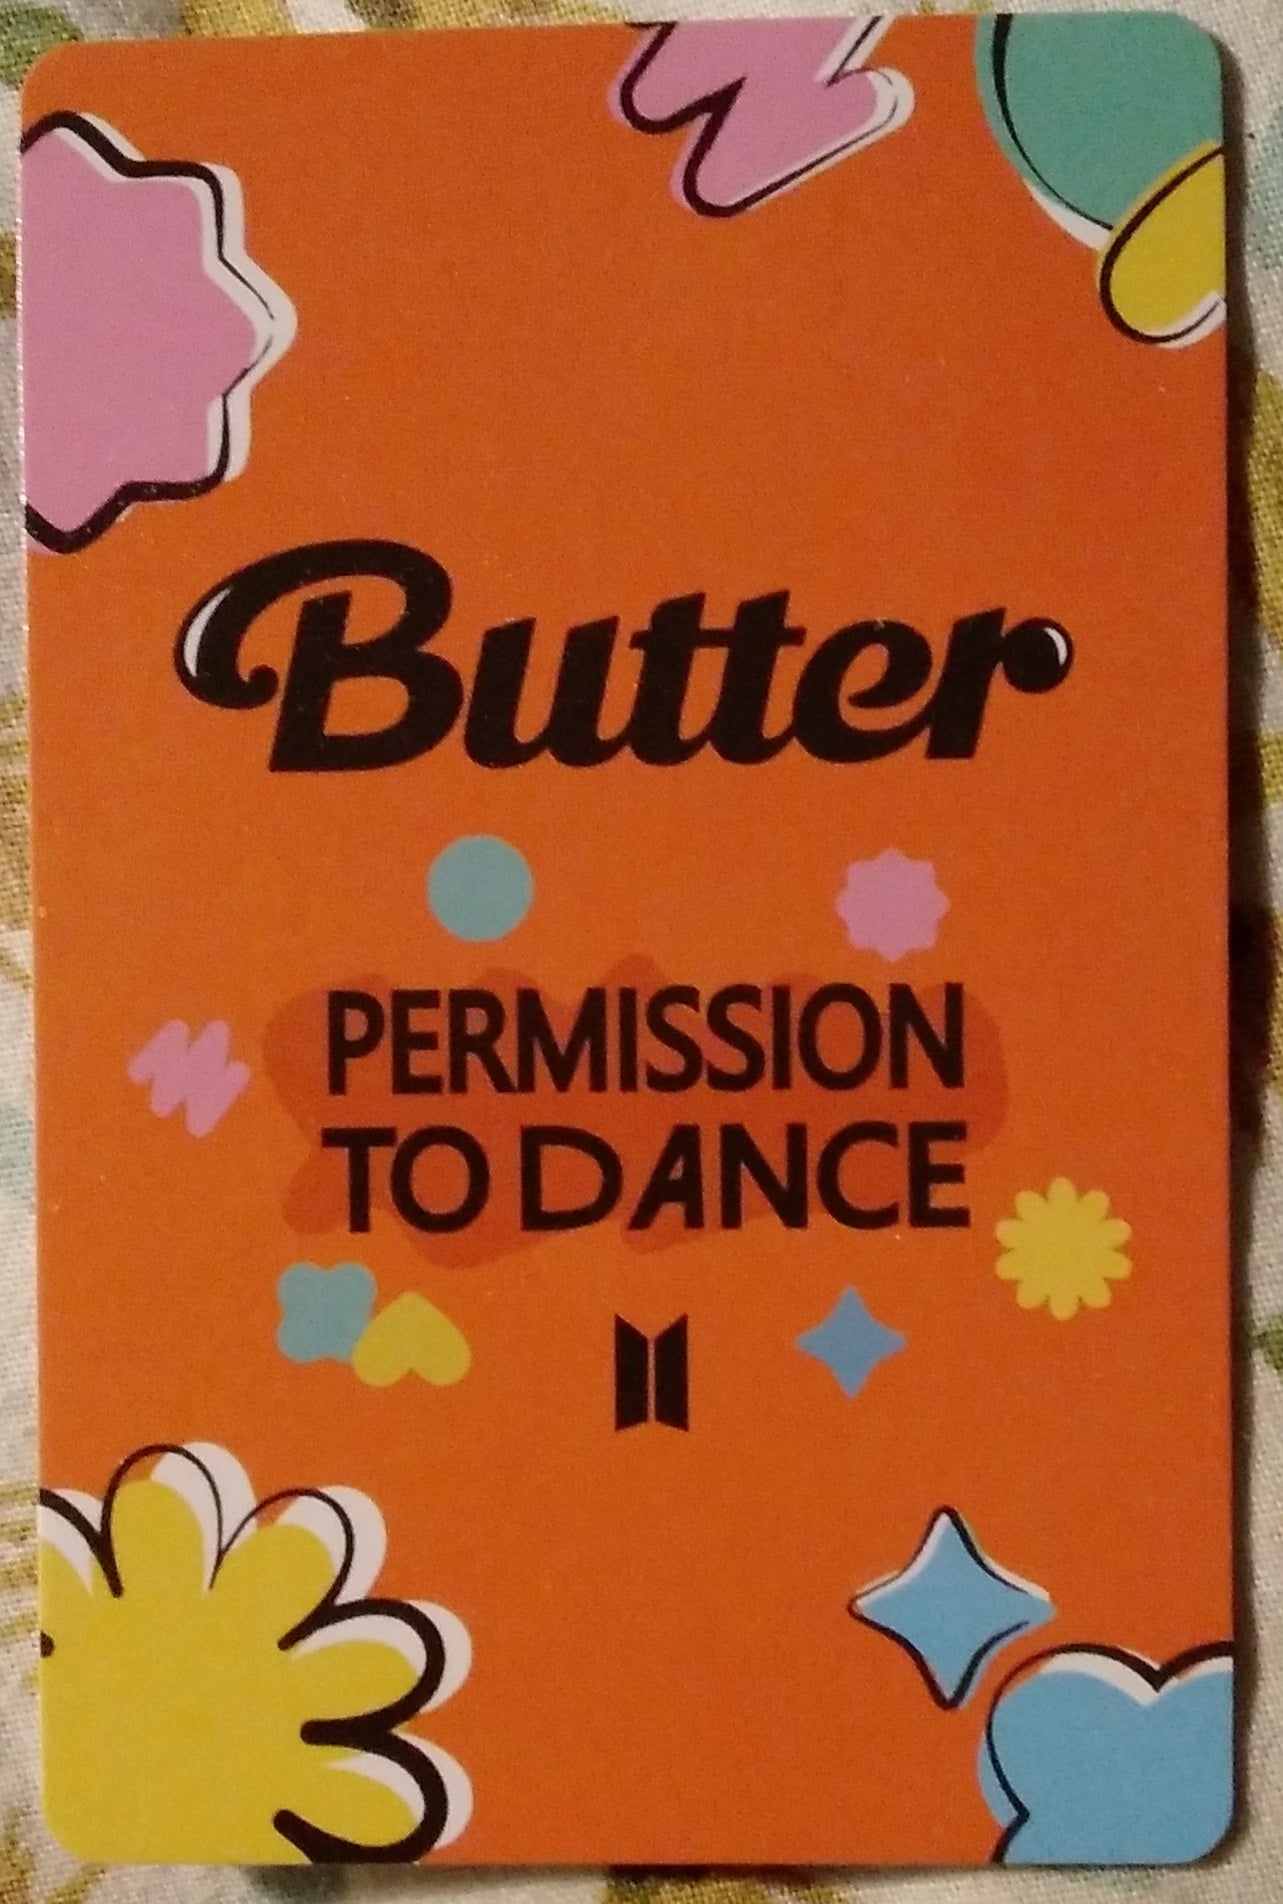 BTS photocard  Permission to dance  Butter V, RM, jimin j hope